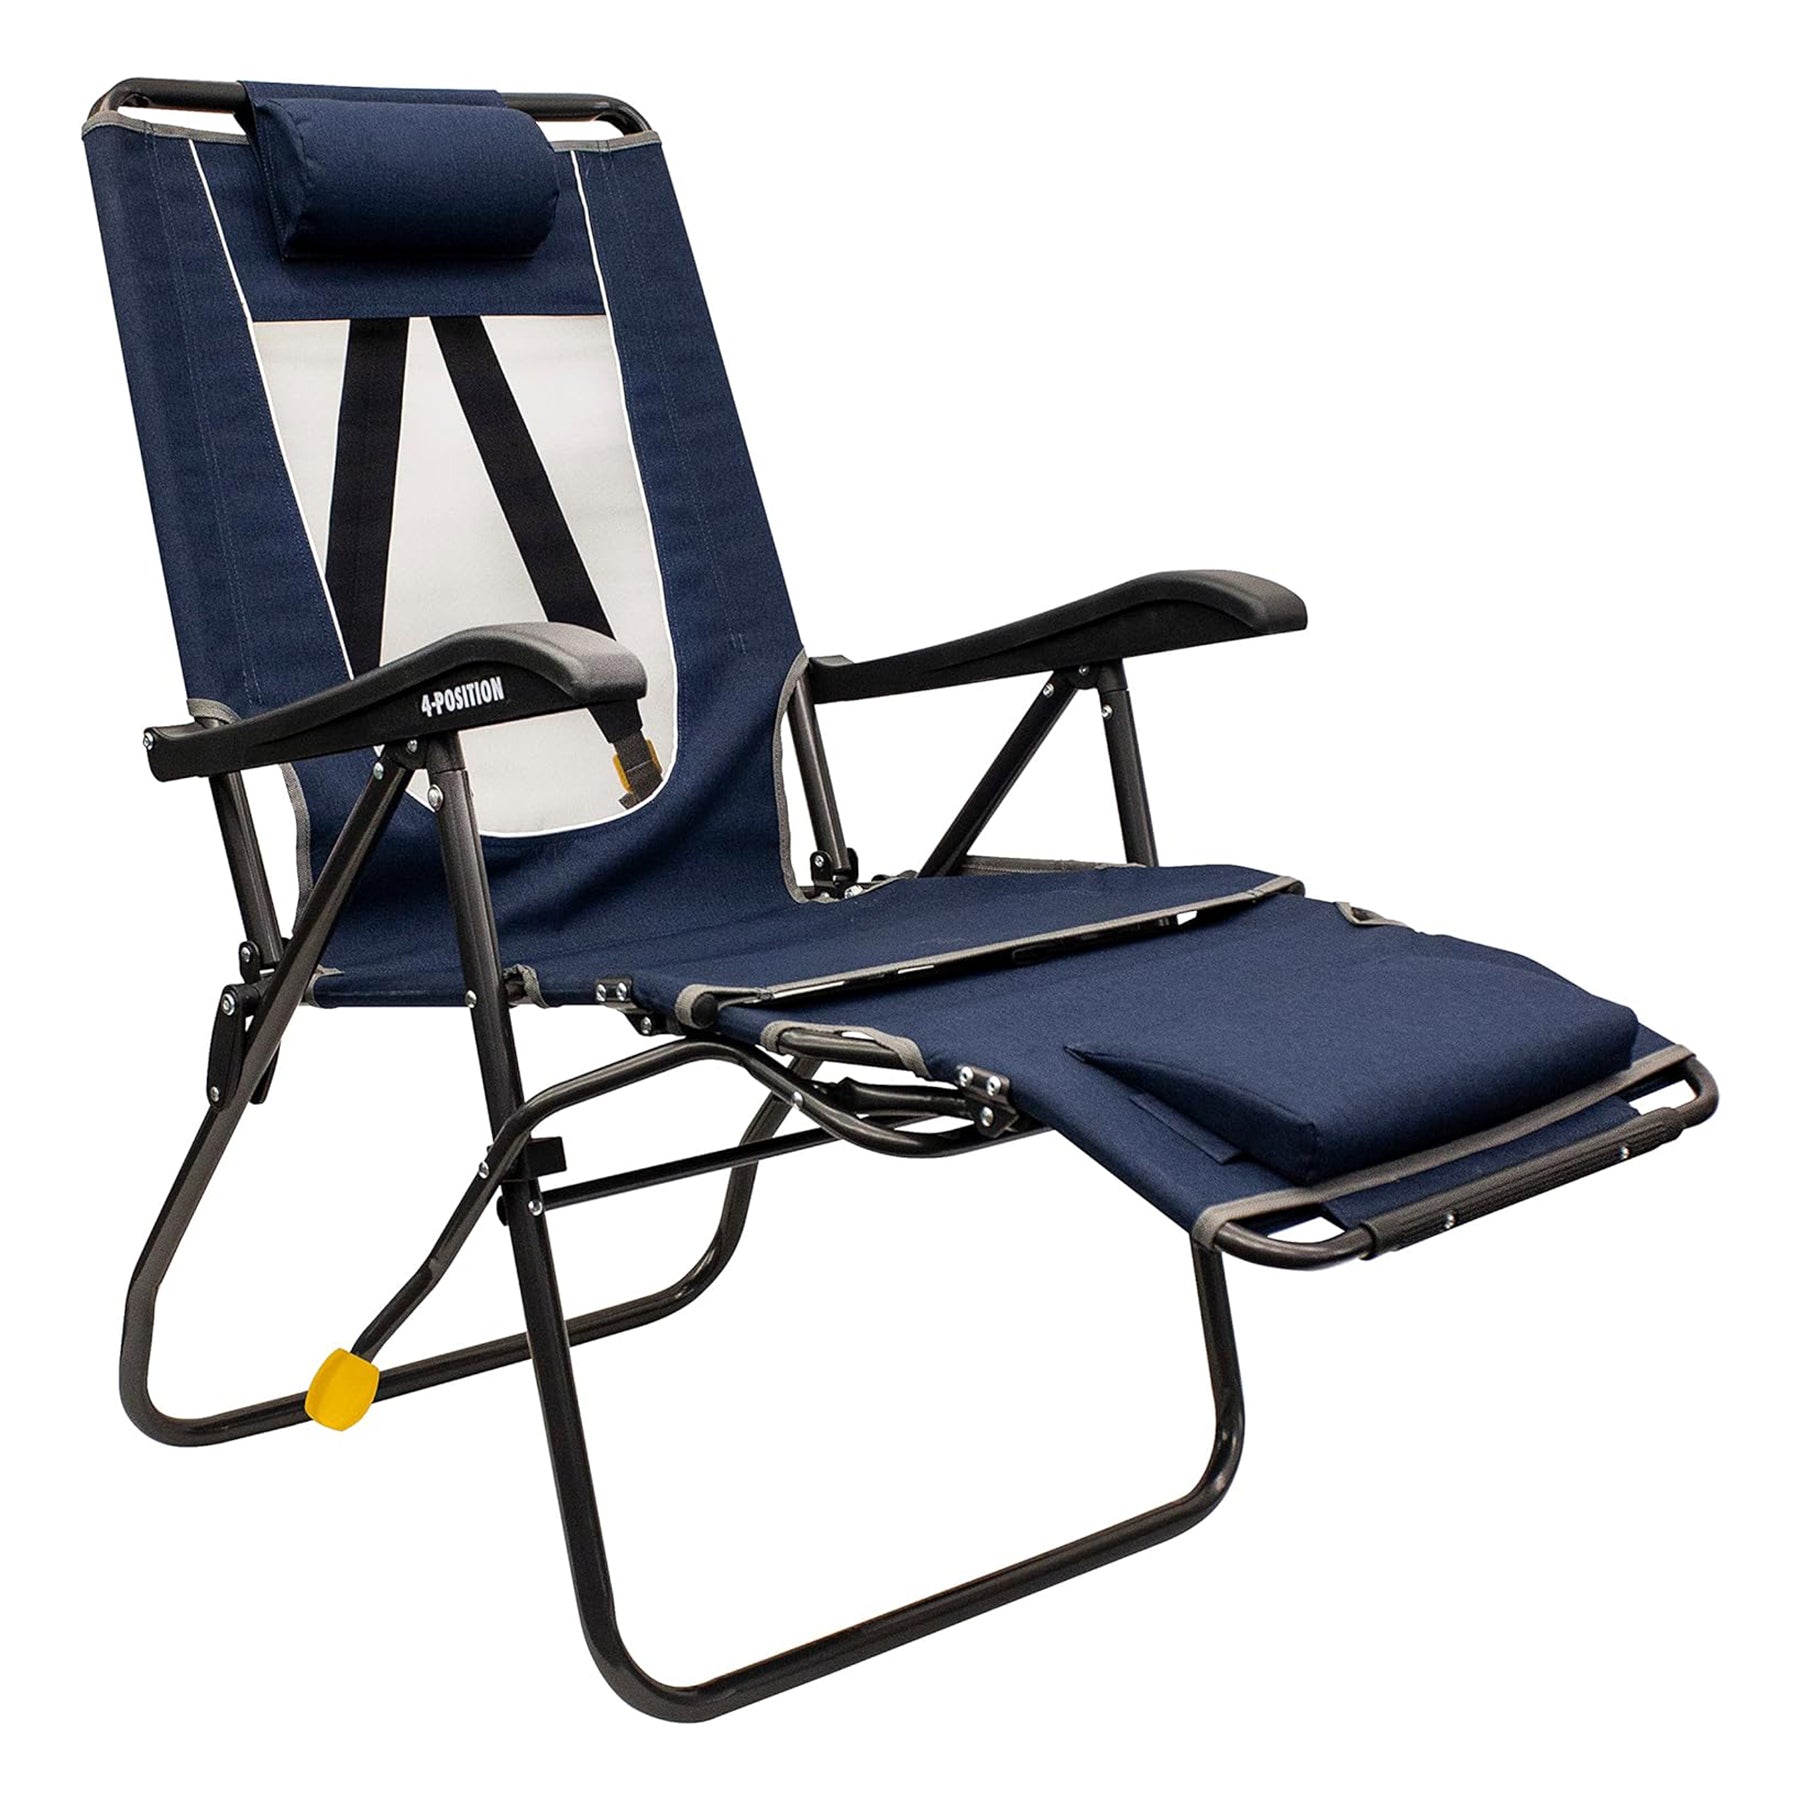 Outdoor Legz-Up-Lounger Chair